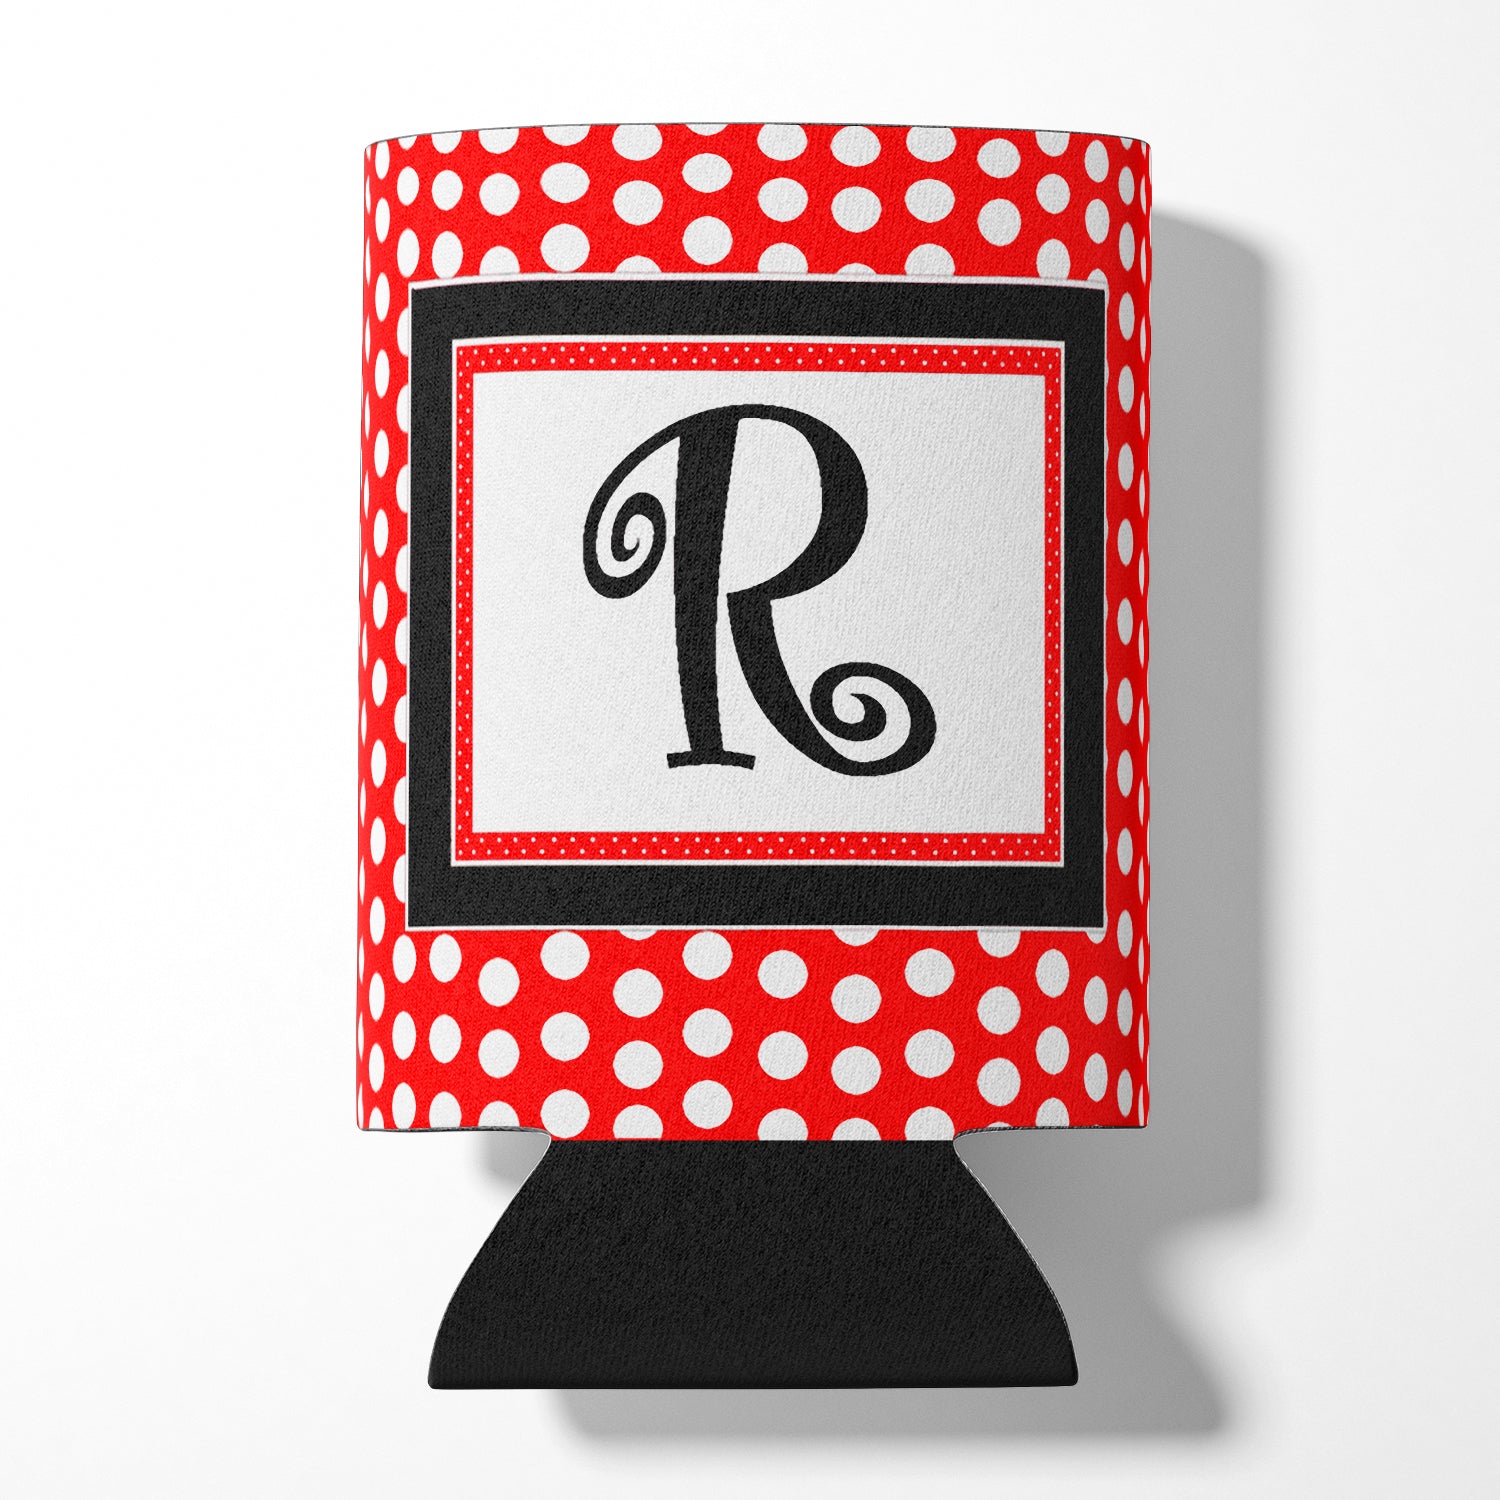 Letter R Initial Monogram - Red Black Polka Dots Can or Bottle Beverage Insulator Hugger.